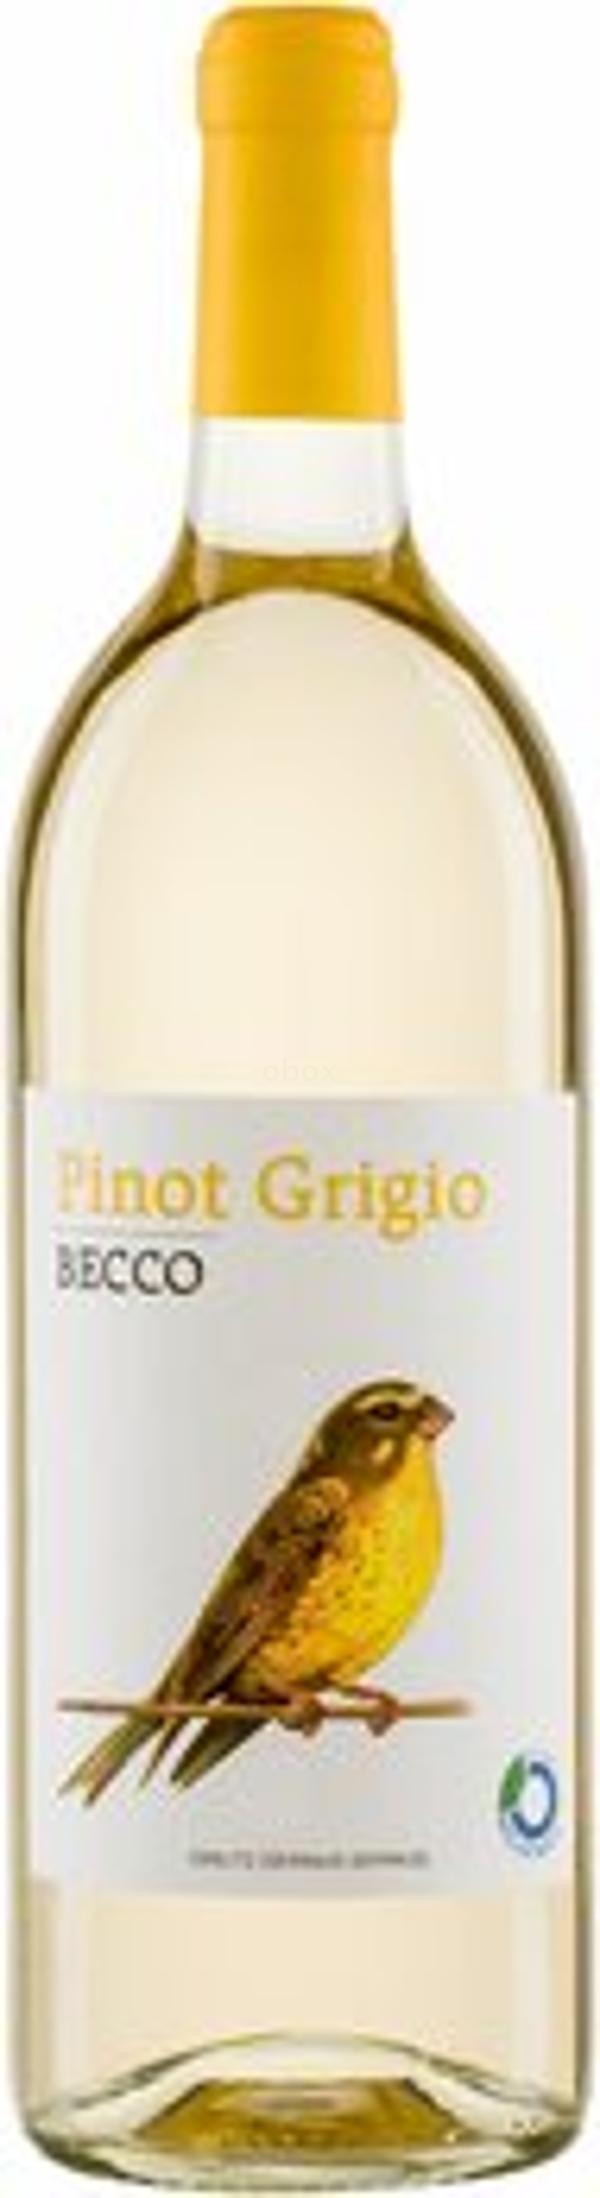 Produktfoto zu BECCO  Pinot Grigio 1l